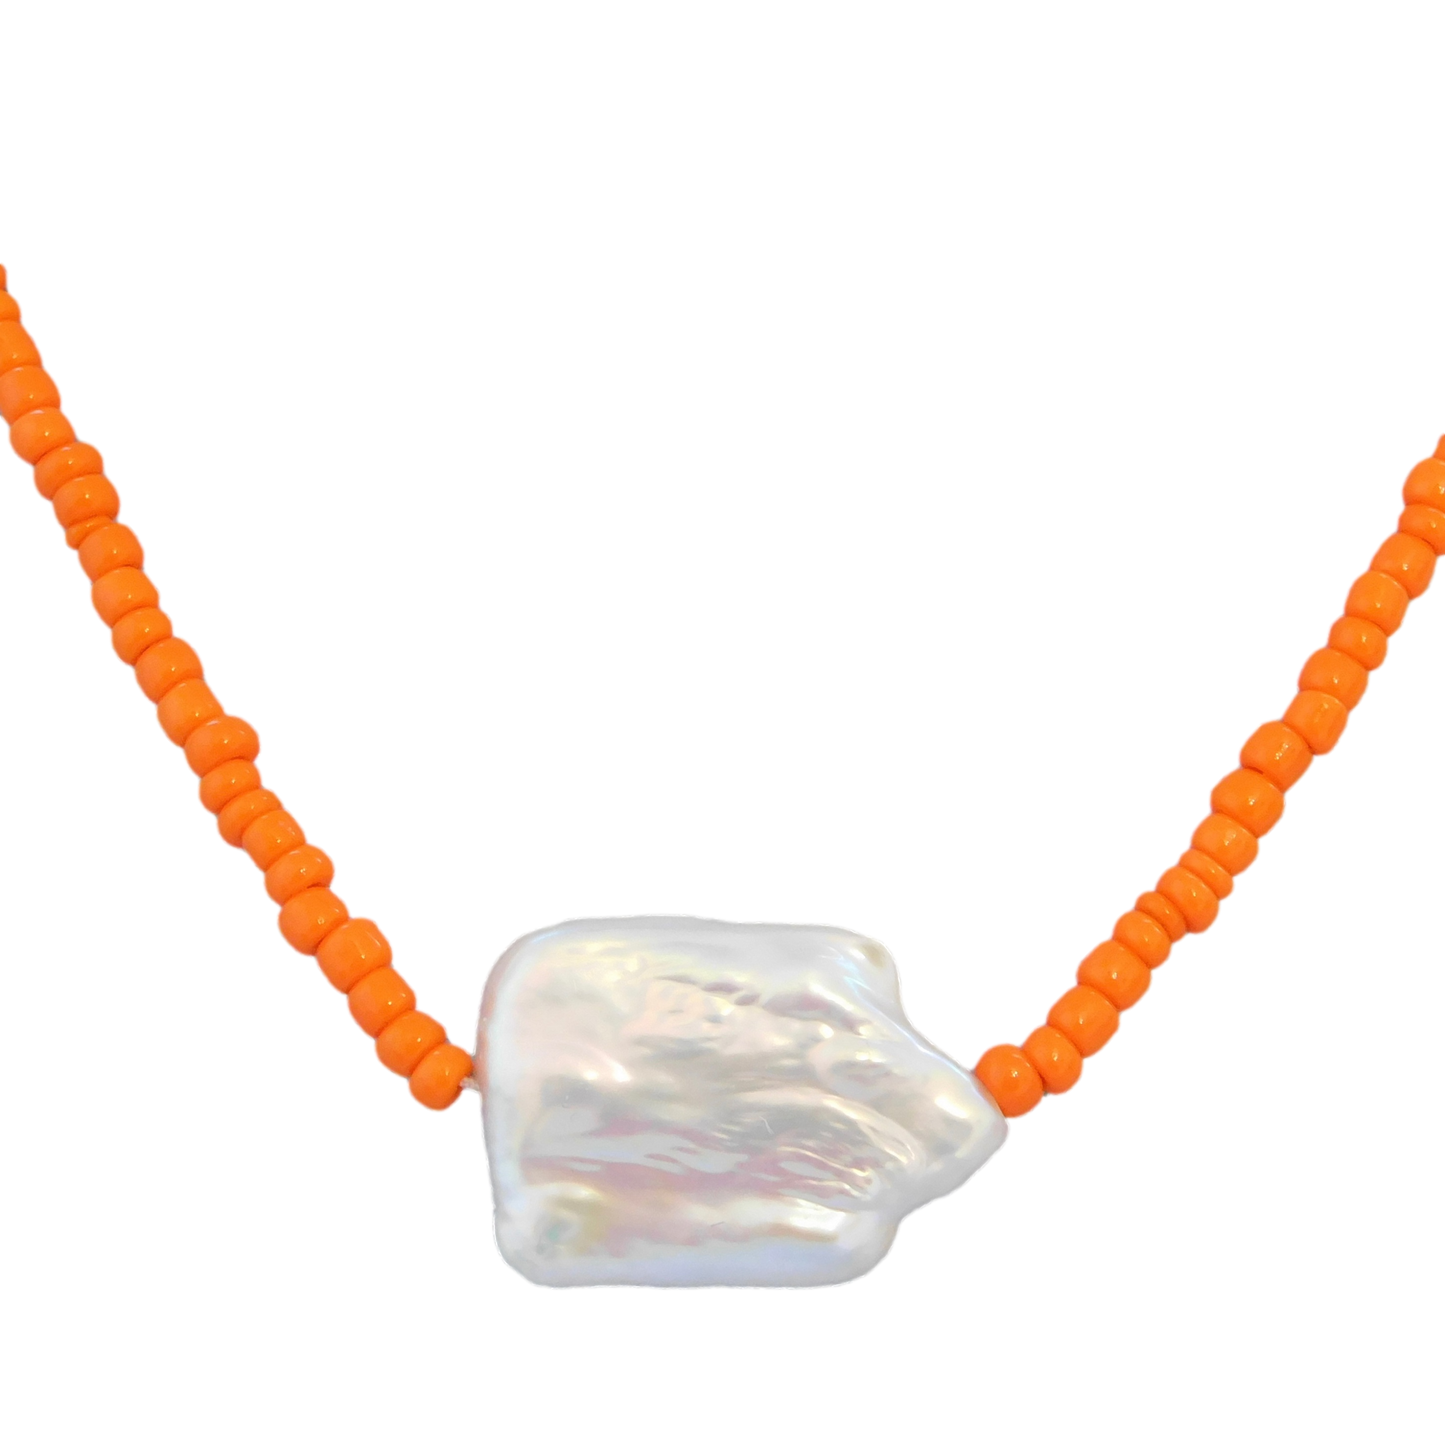 Orange Pearl Necklace